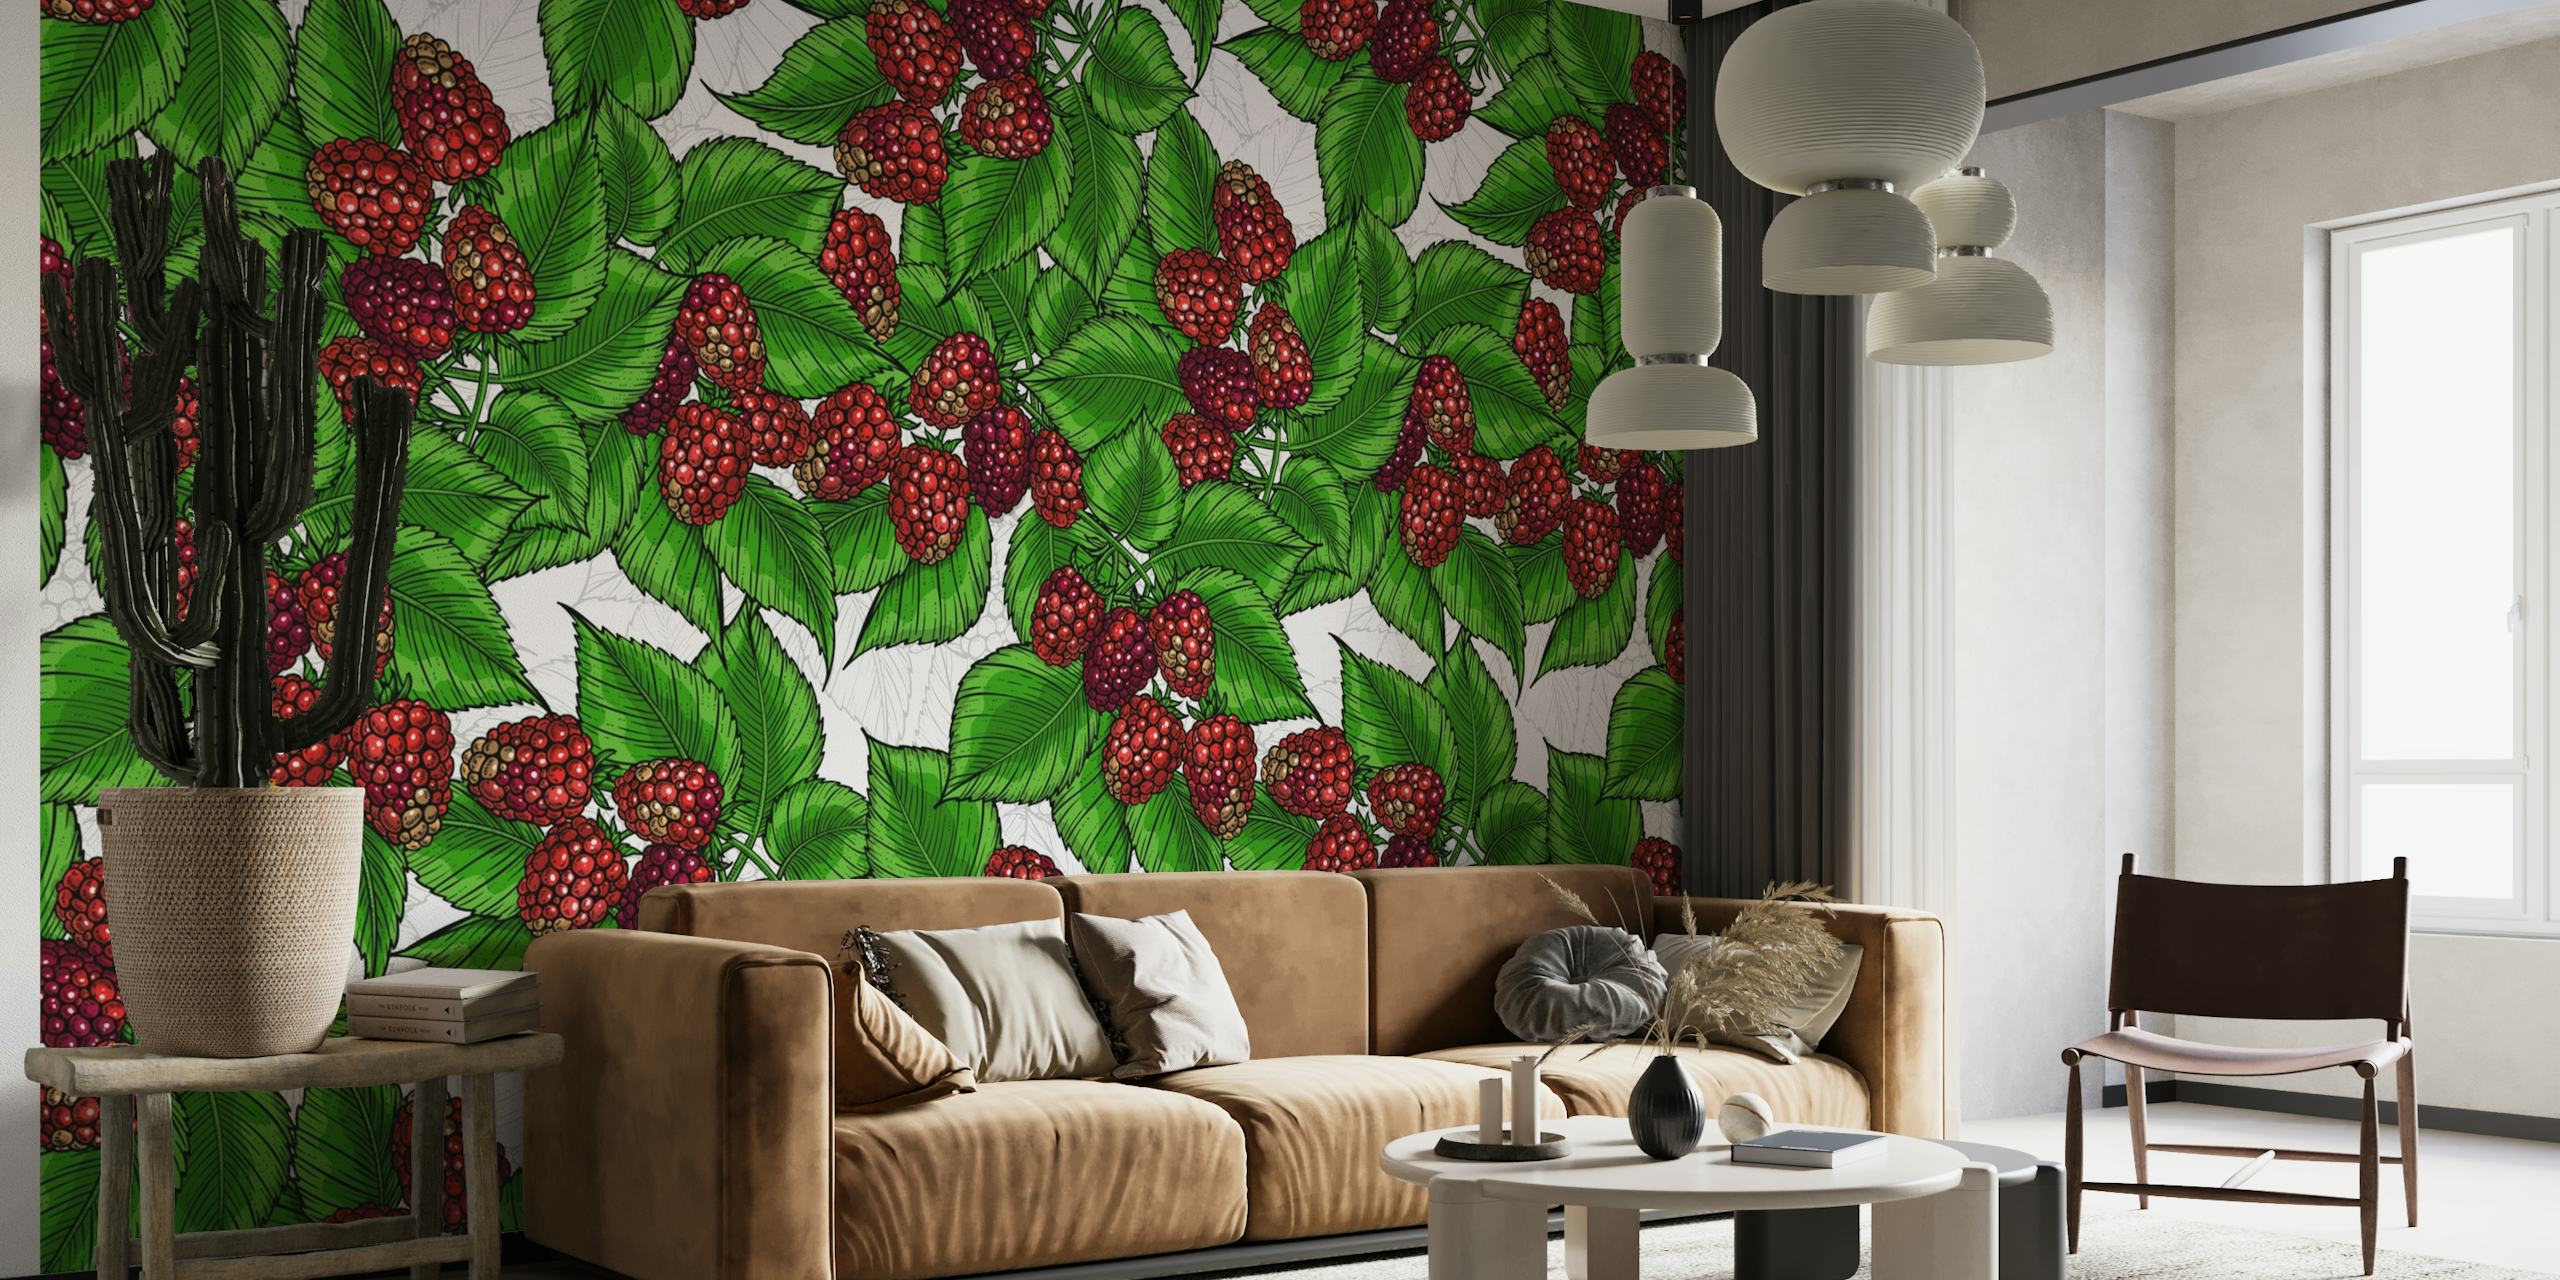 Juicy raspberries entwined with green leaves wall mural